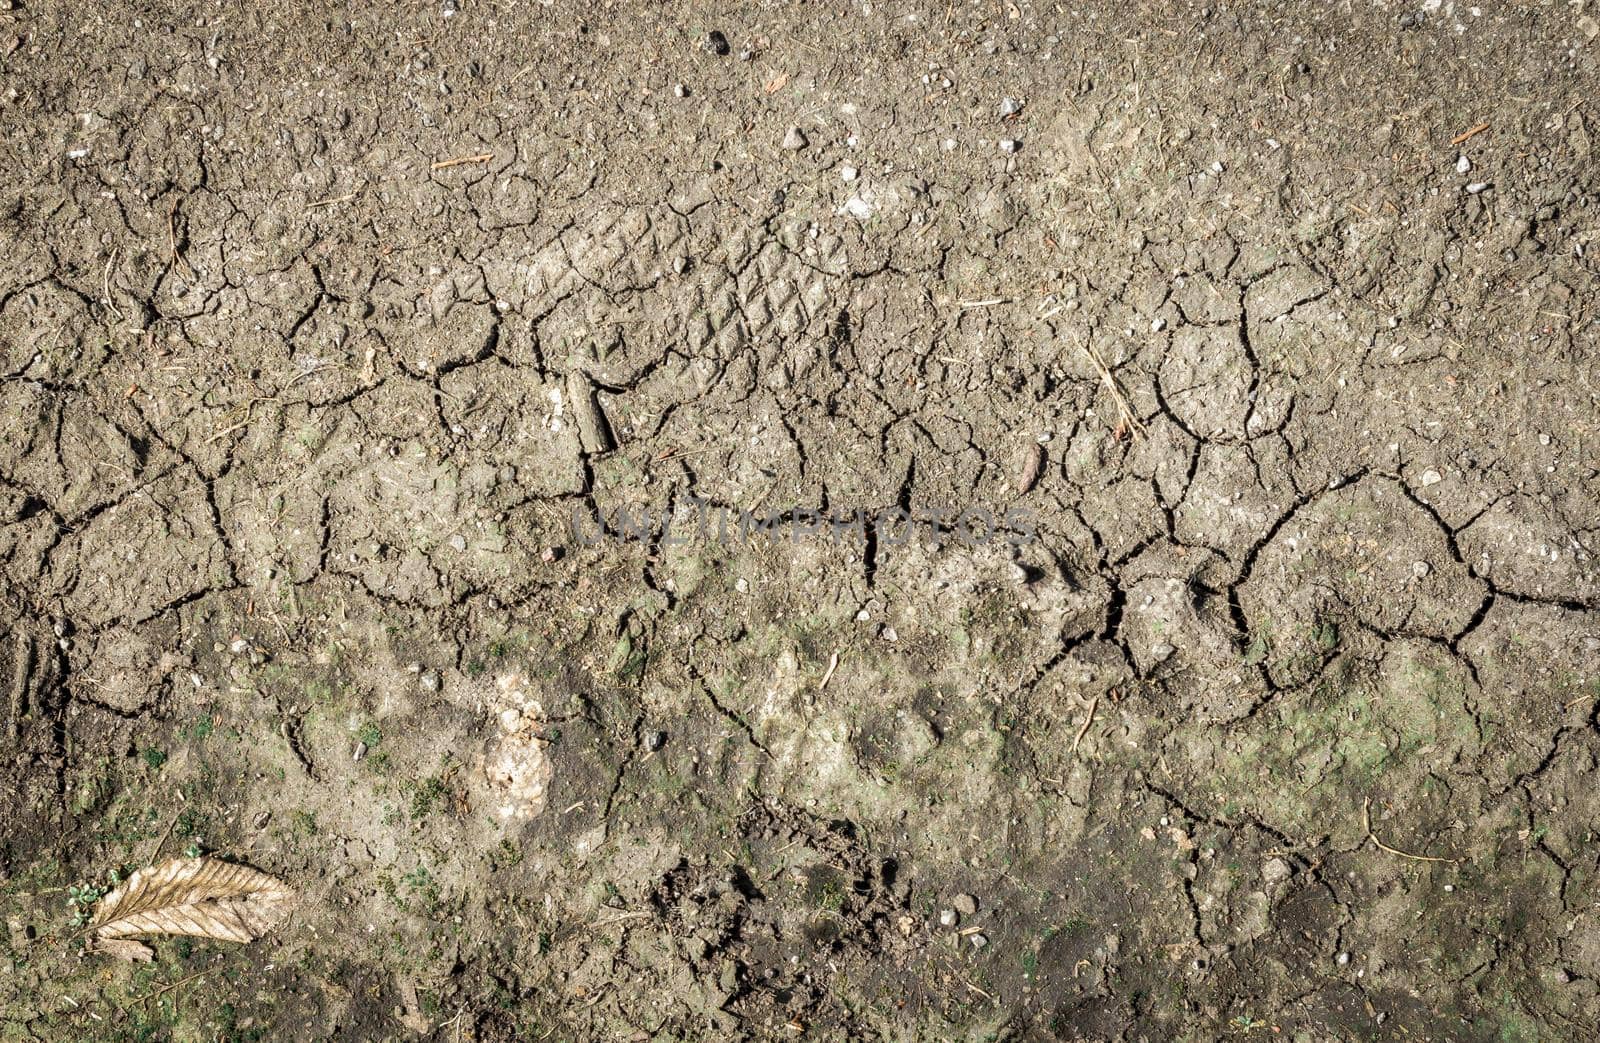 Crack soil on dry season, Global warming effect.